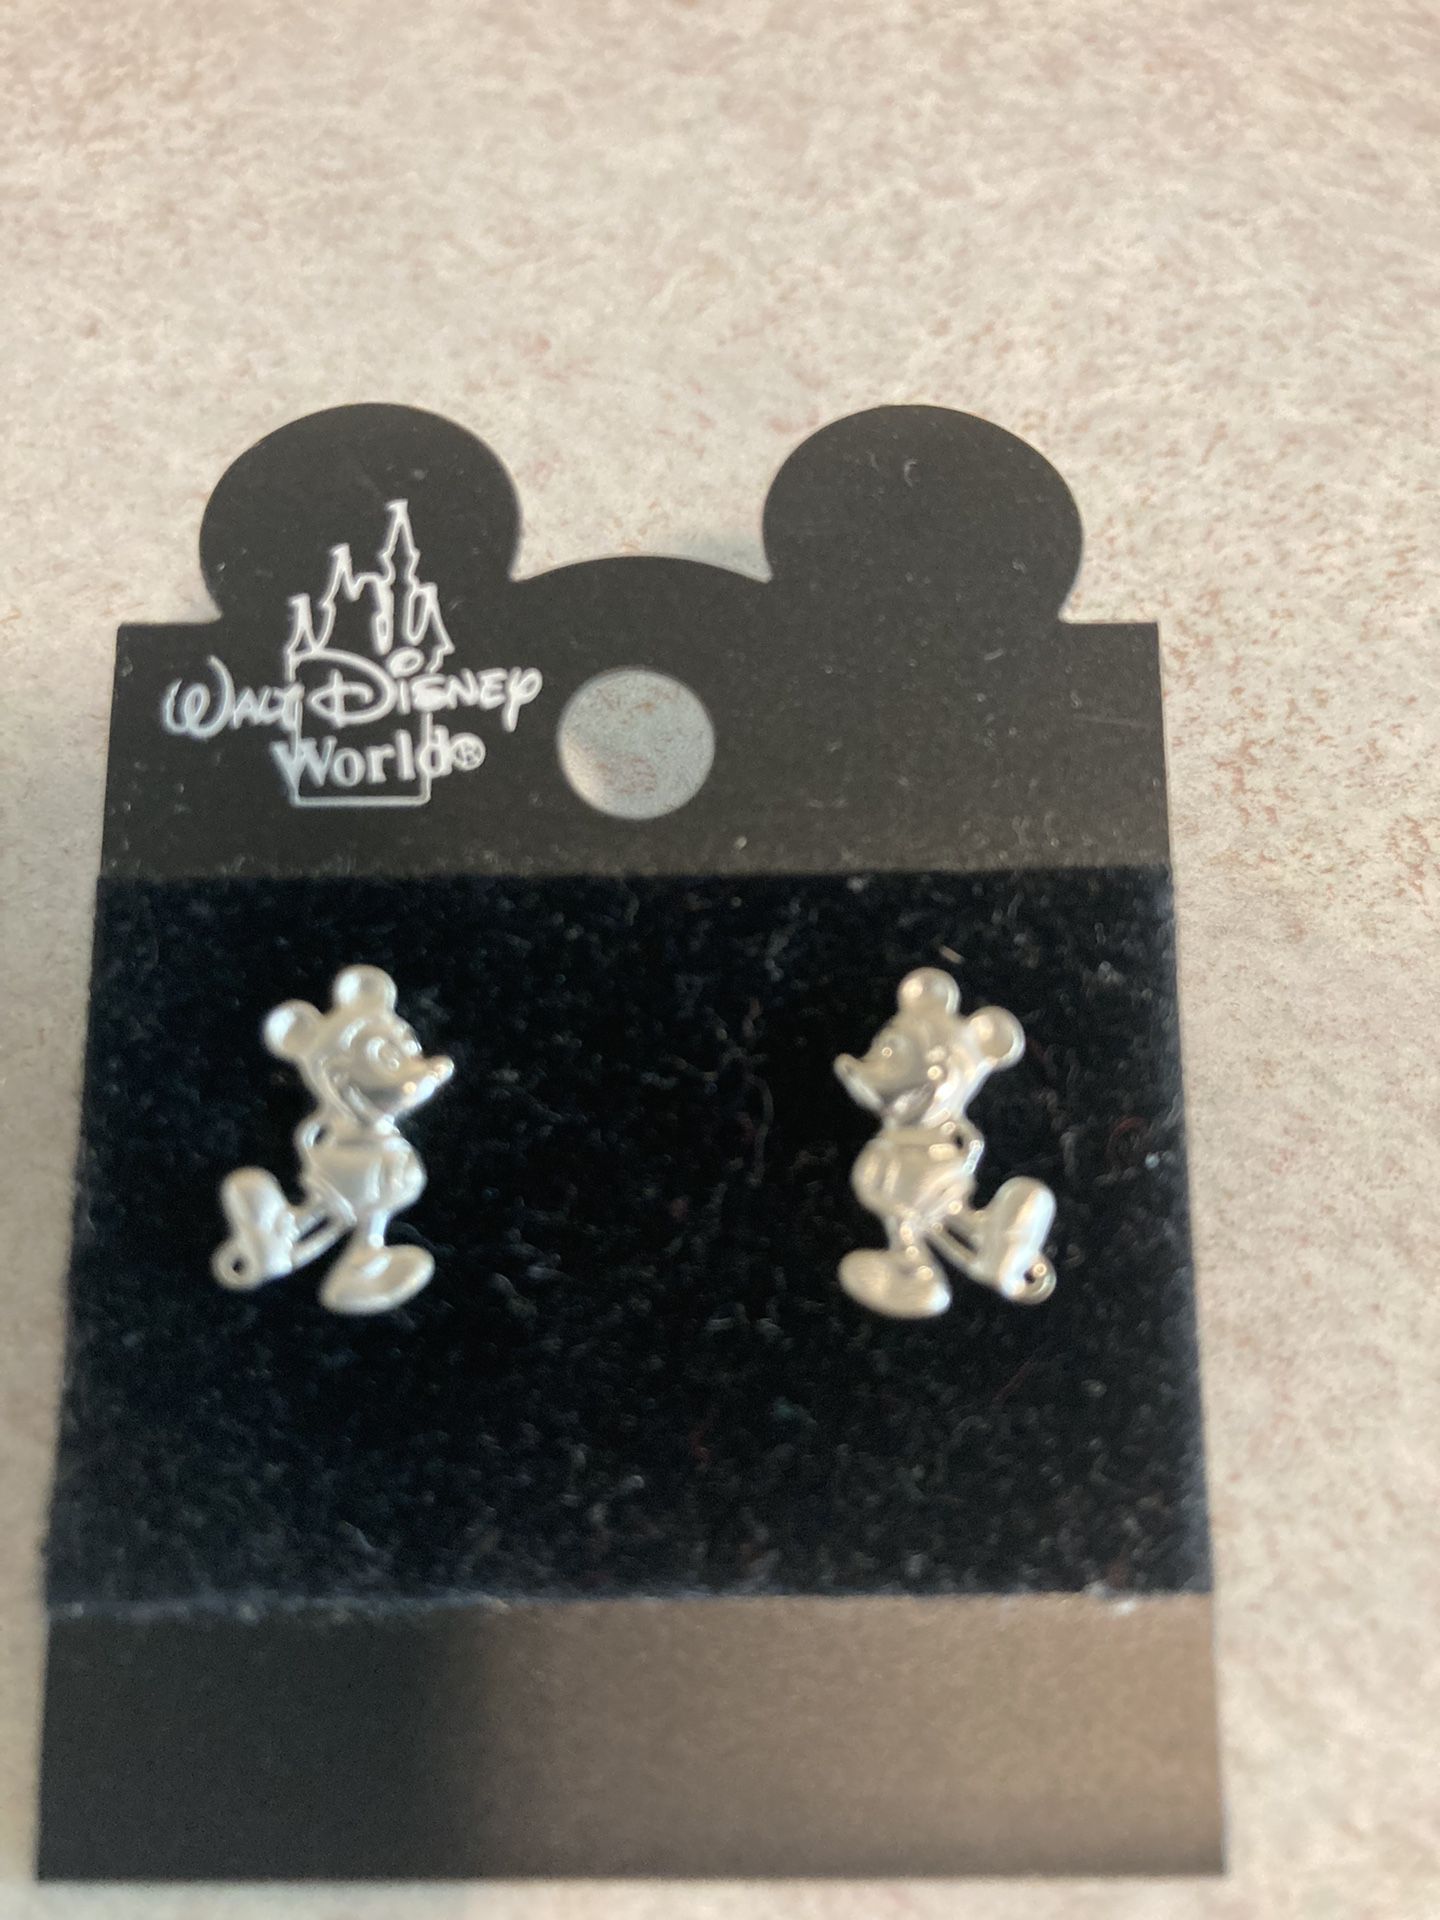 NEW Mickey Mouse Earrings.  $11.00each All from Walt Disney World. 